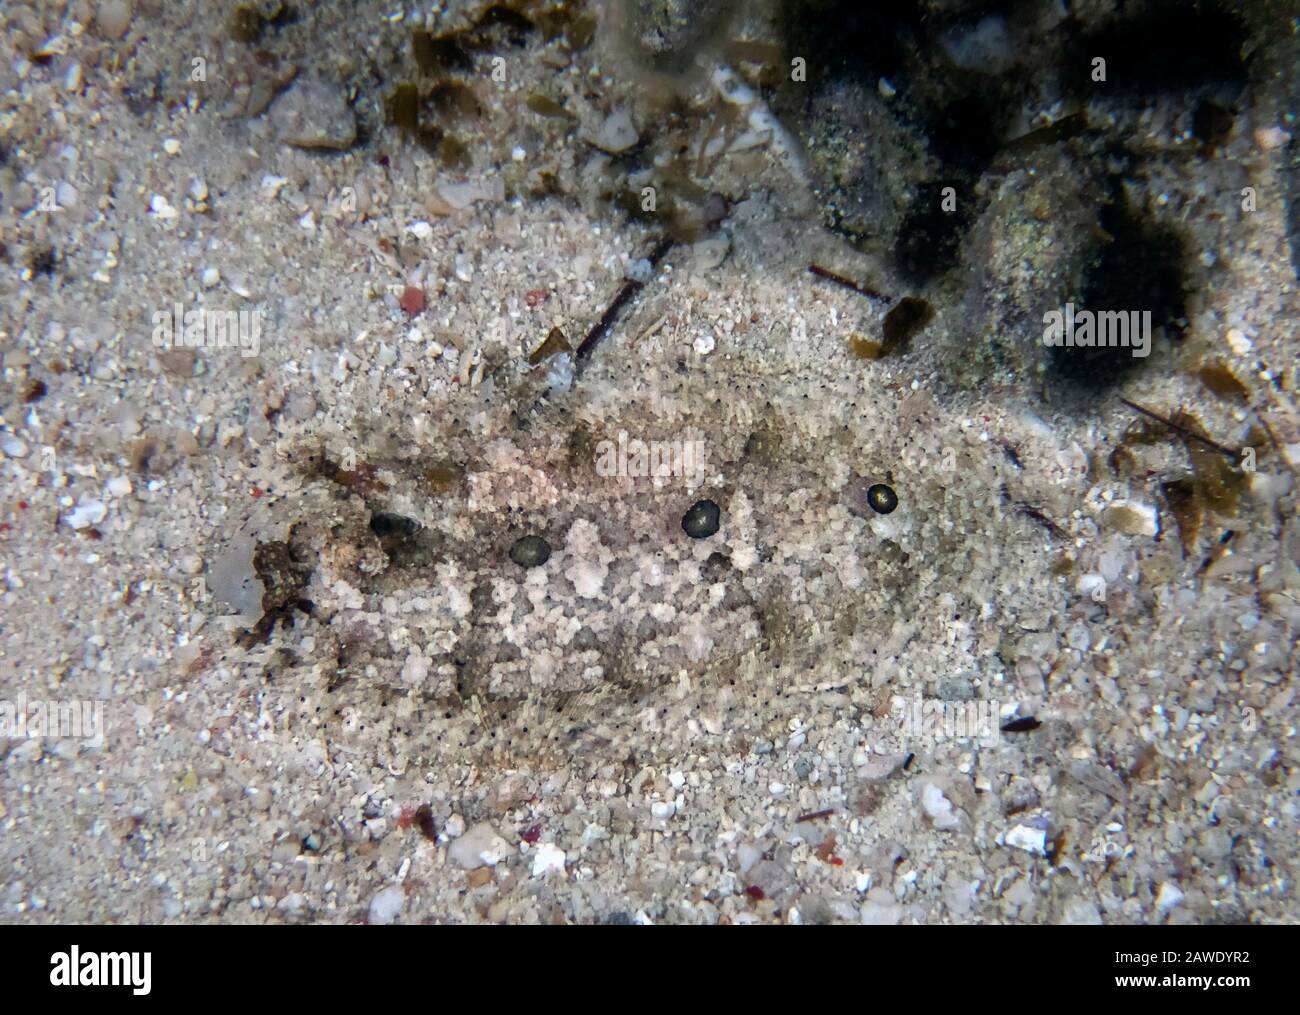 Three Spot Flounder (Samariscus triocellatus) Stock Photo